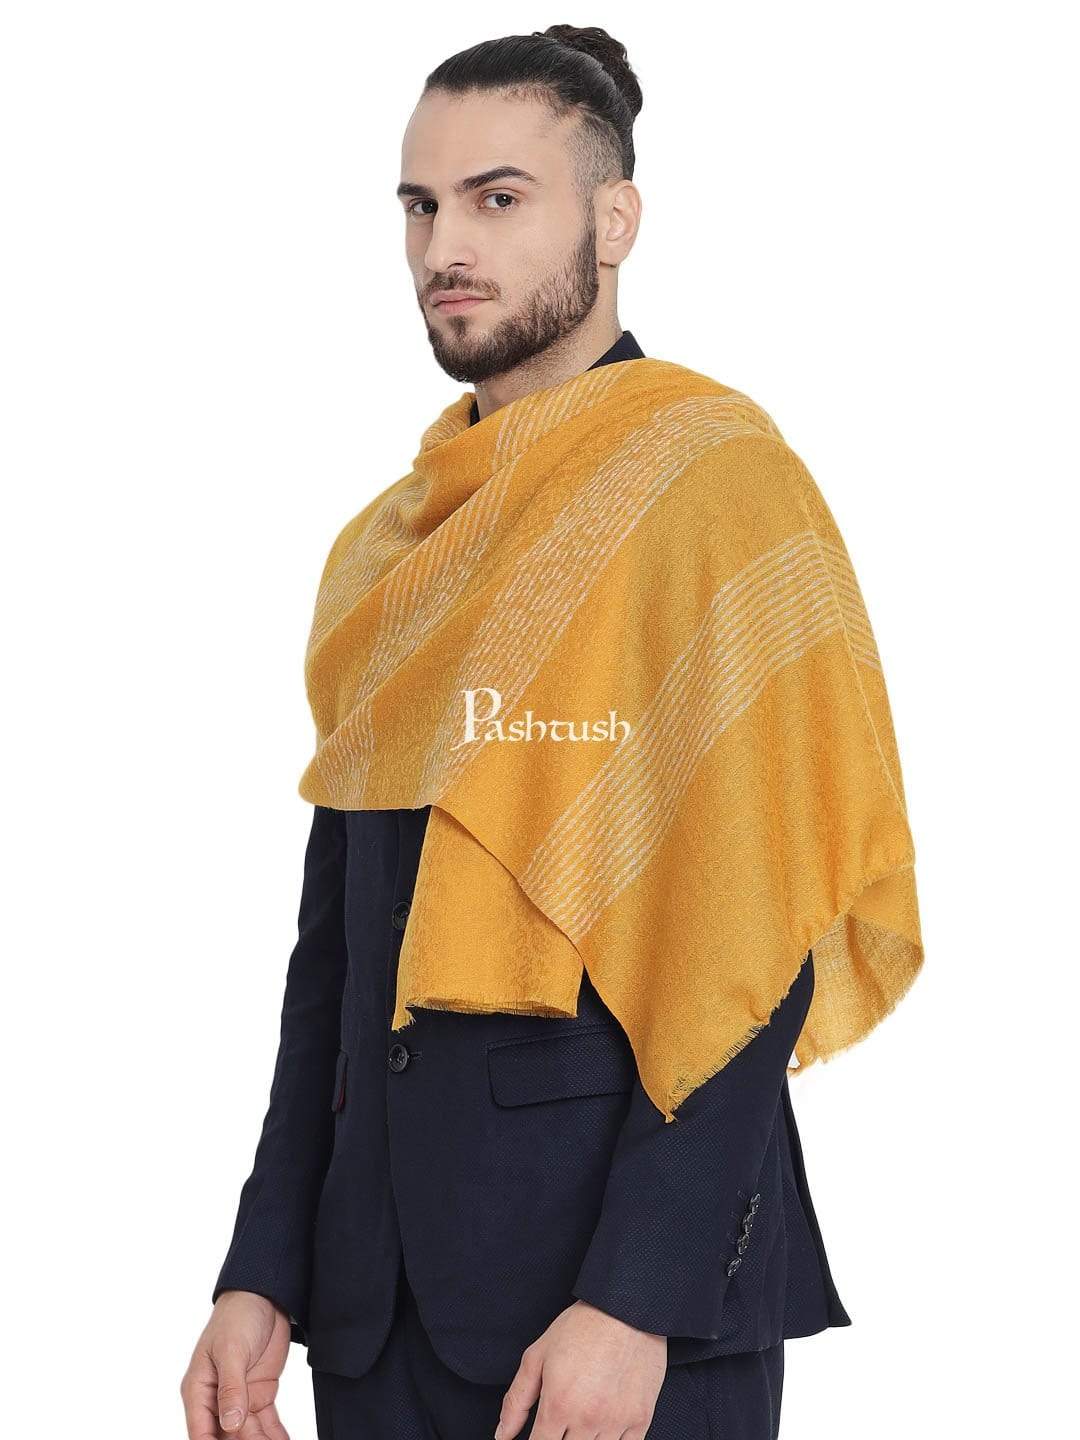 Pashtush India 70x200 Pashtush Mens Fine Wool Striped Muffler, Soft and Warm Stole Scarf, yellow